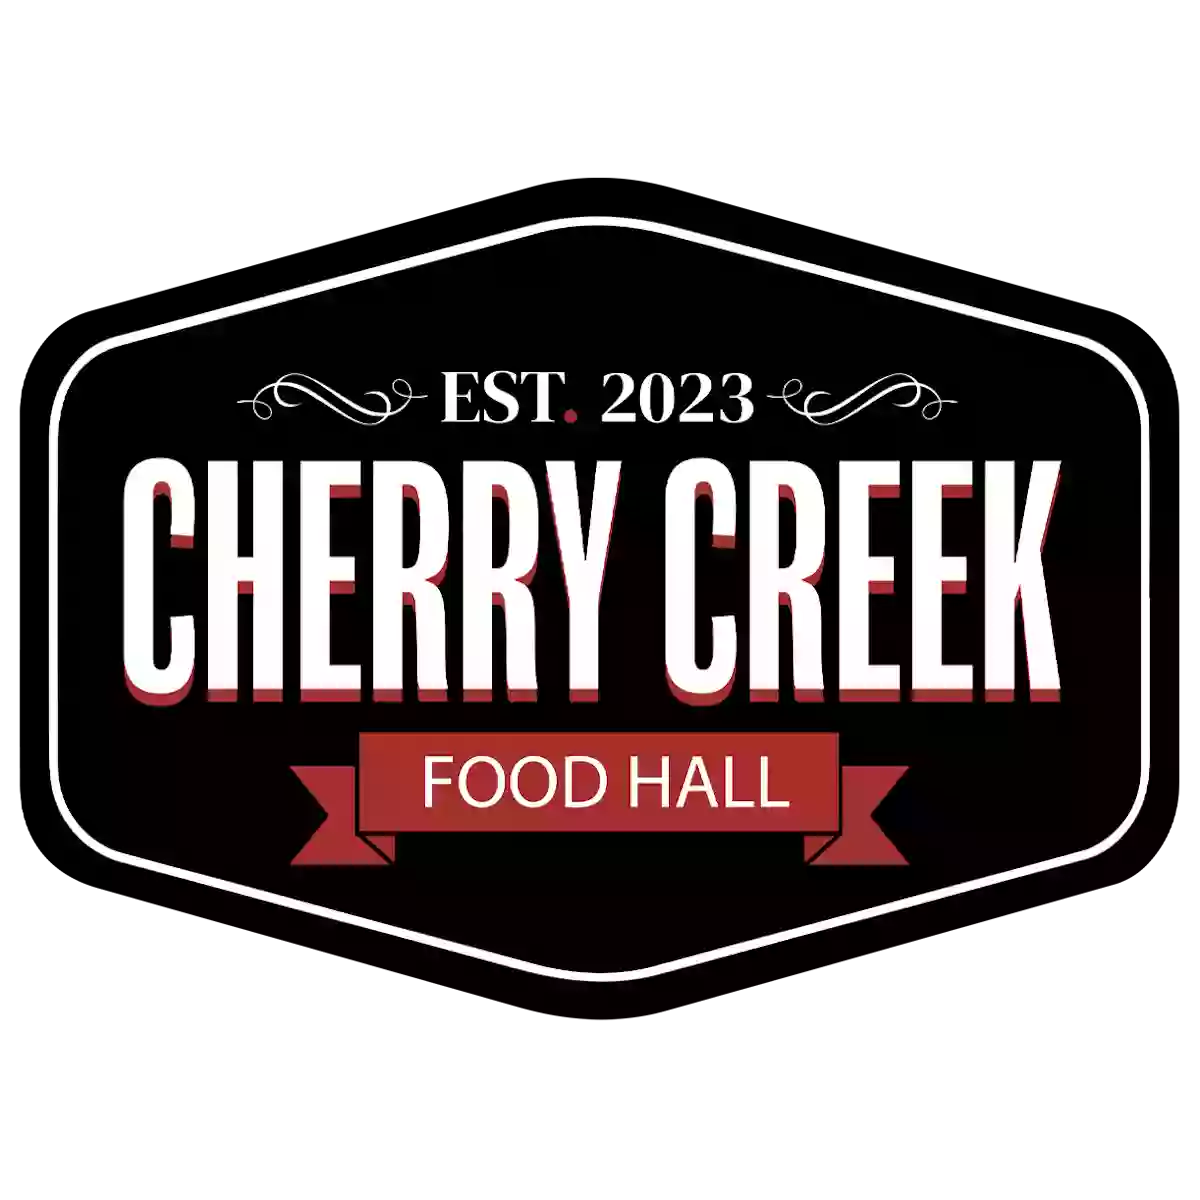 Cherry Creek Food Hall & Brewery (Formerly Grange)